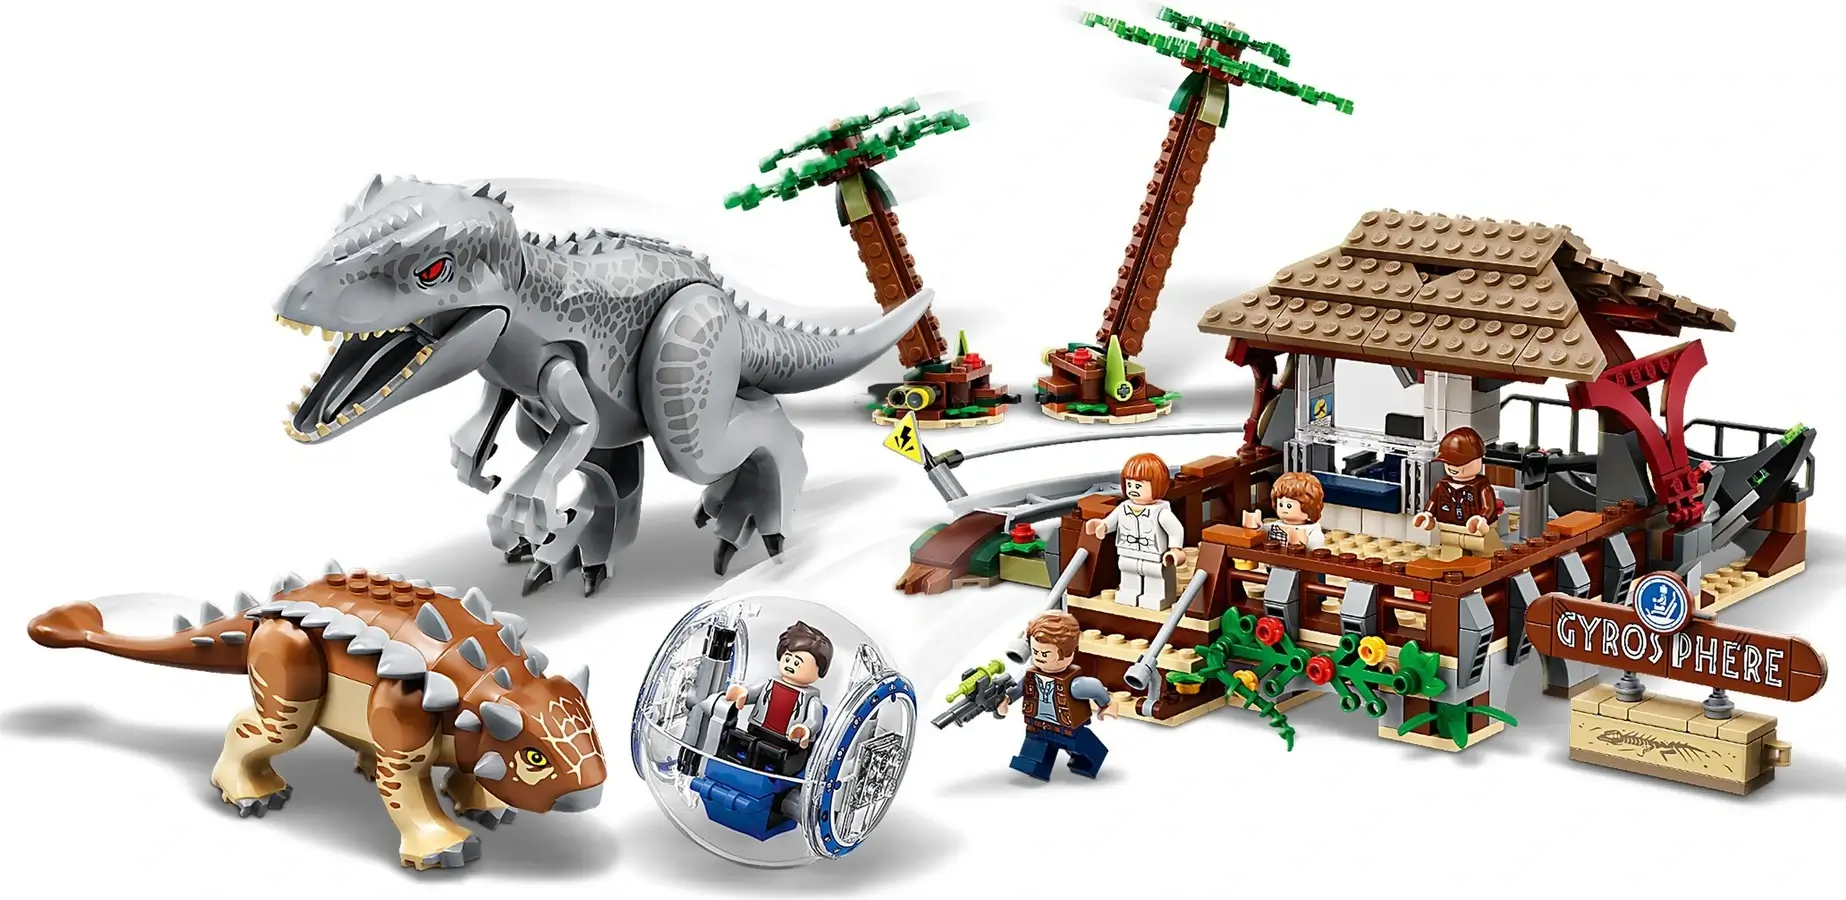 Atak indominus rexa z serii LEGO® Jurassic World™